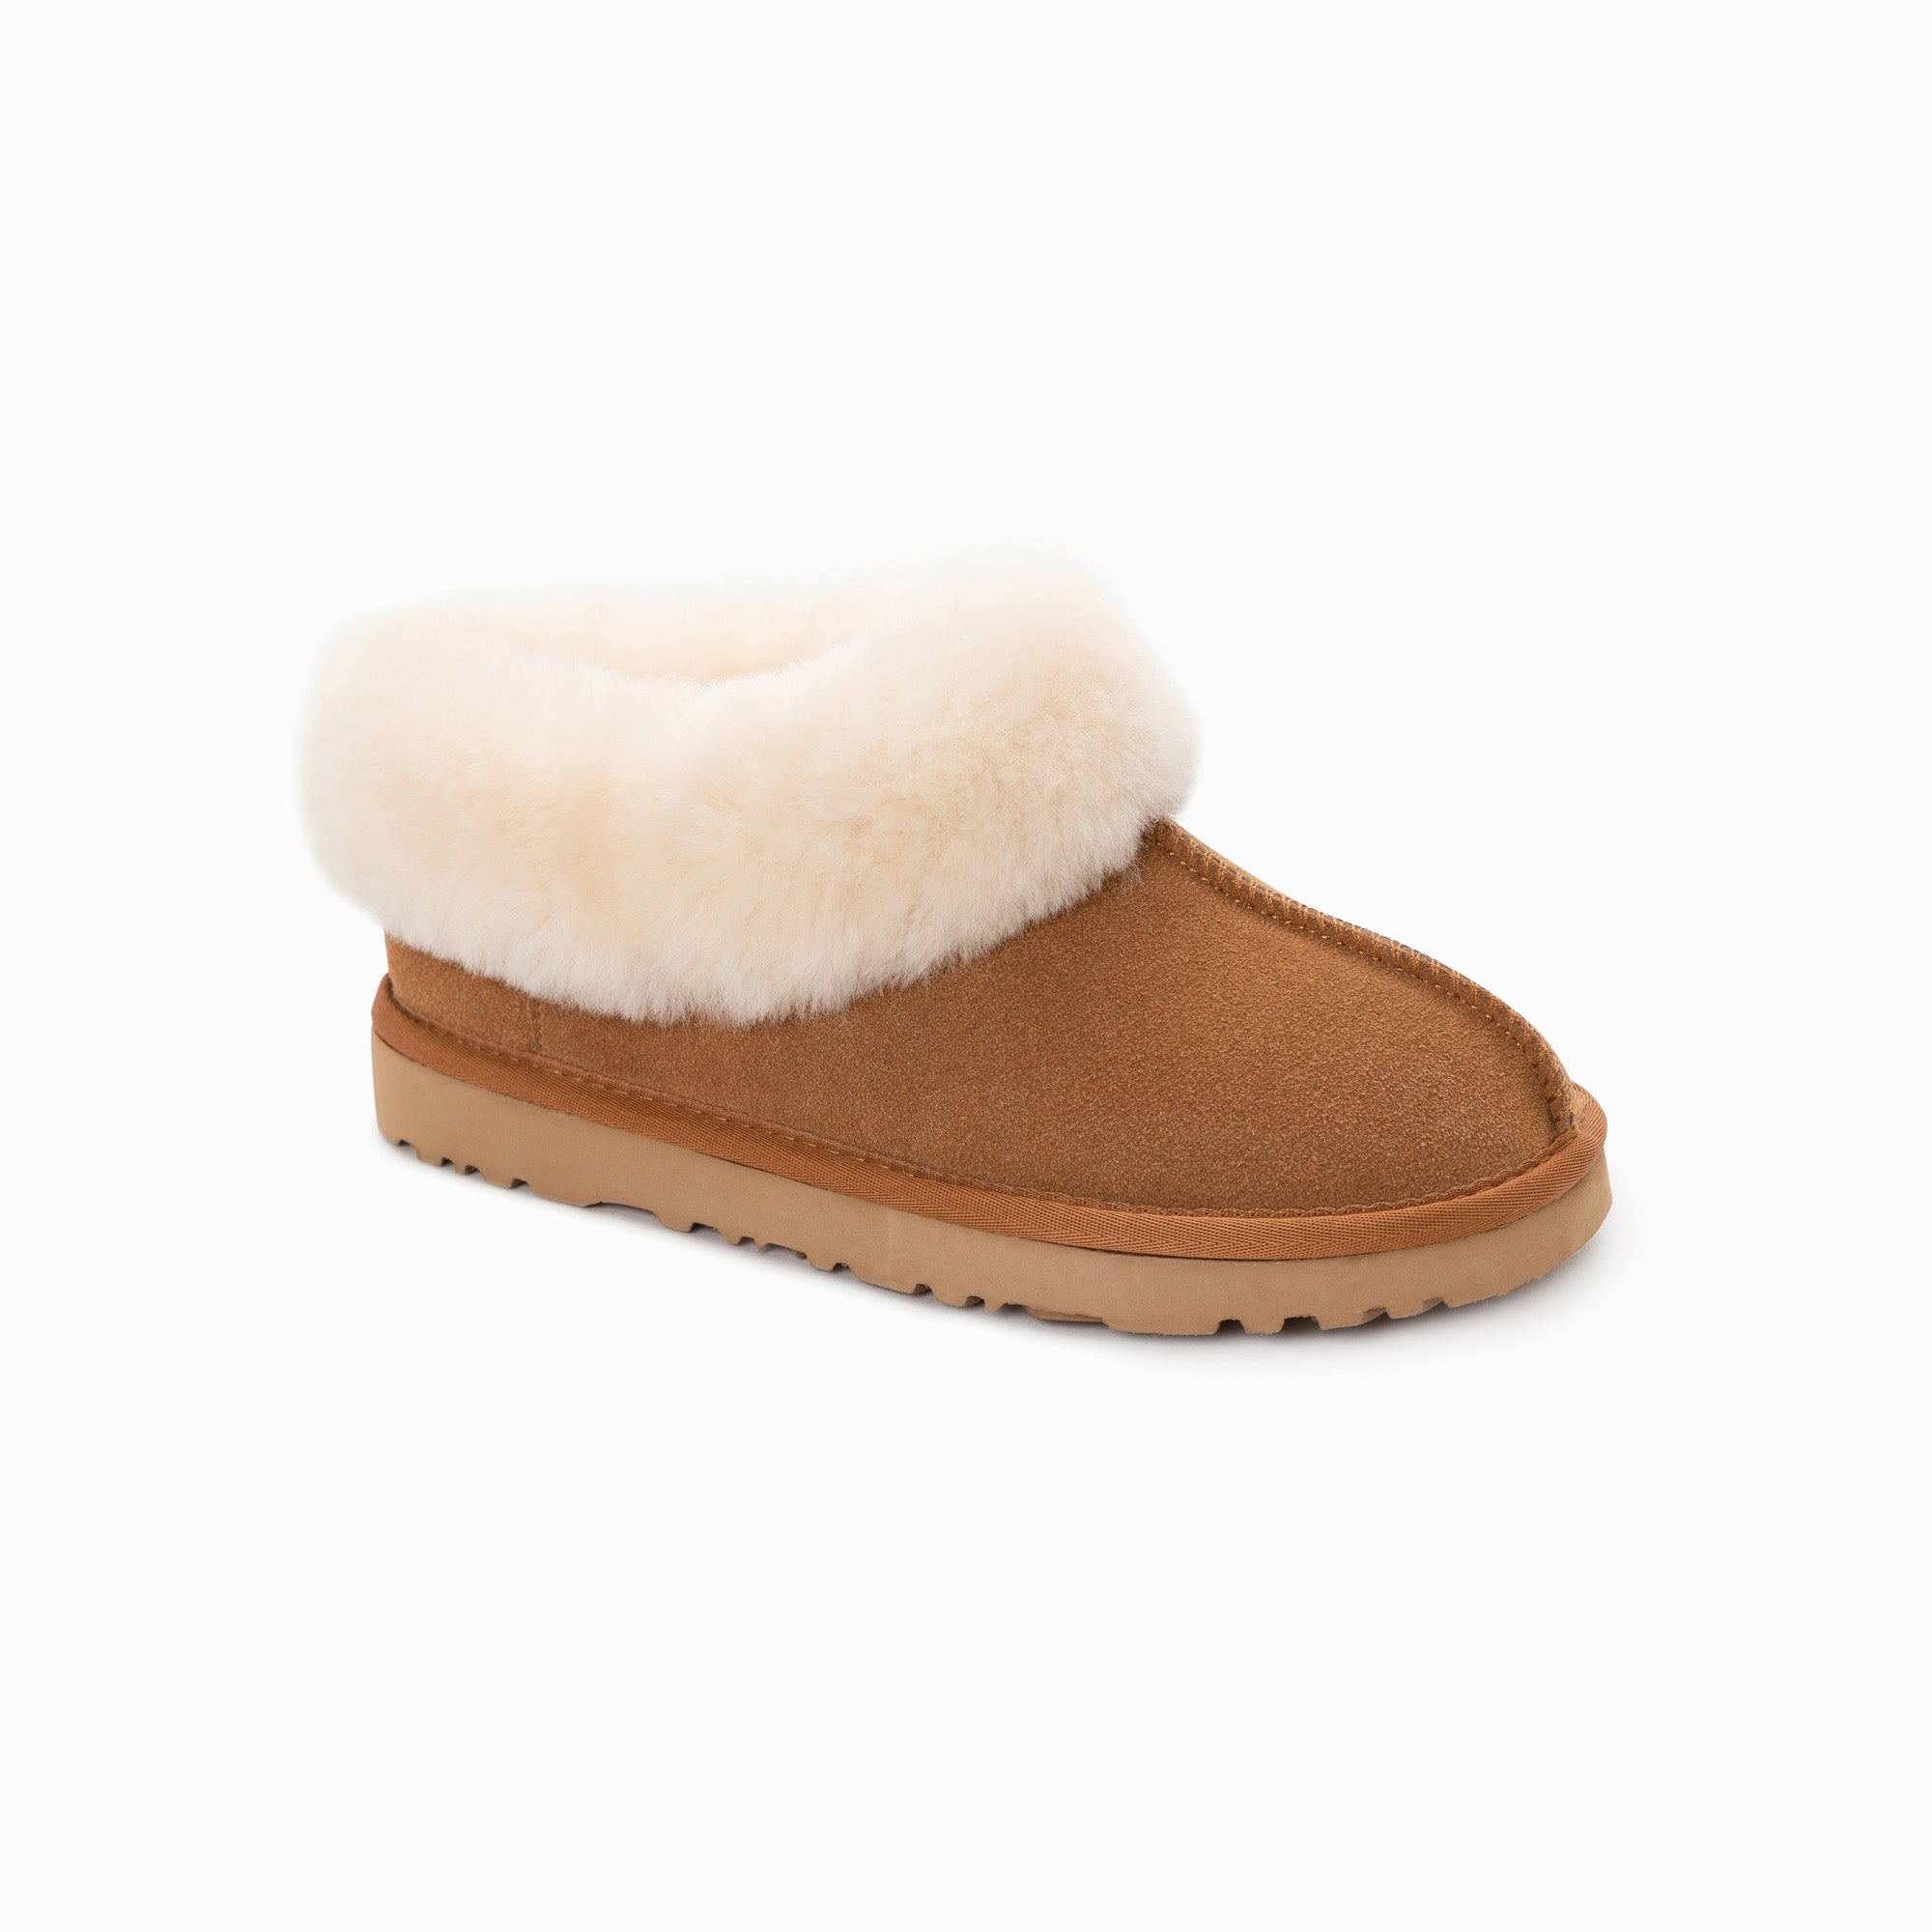 Ugg Slippers Collar Unisex Premium Sheepskin Slippers Suede Ozwear Ugg